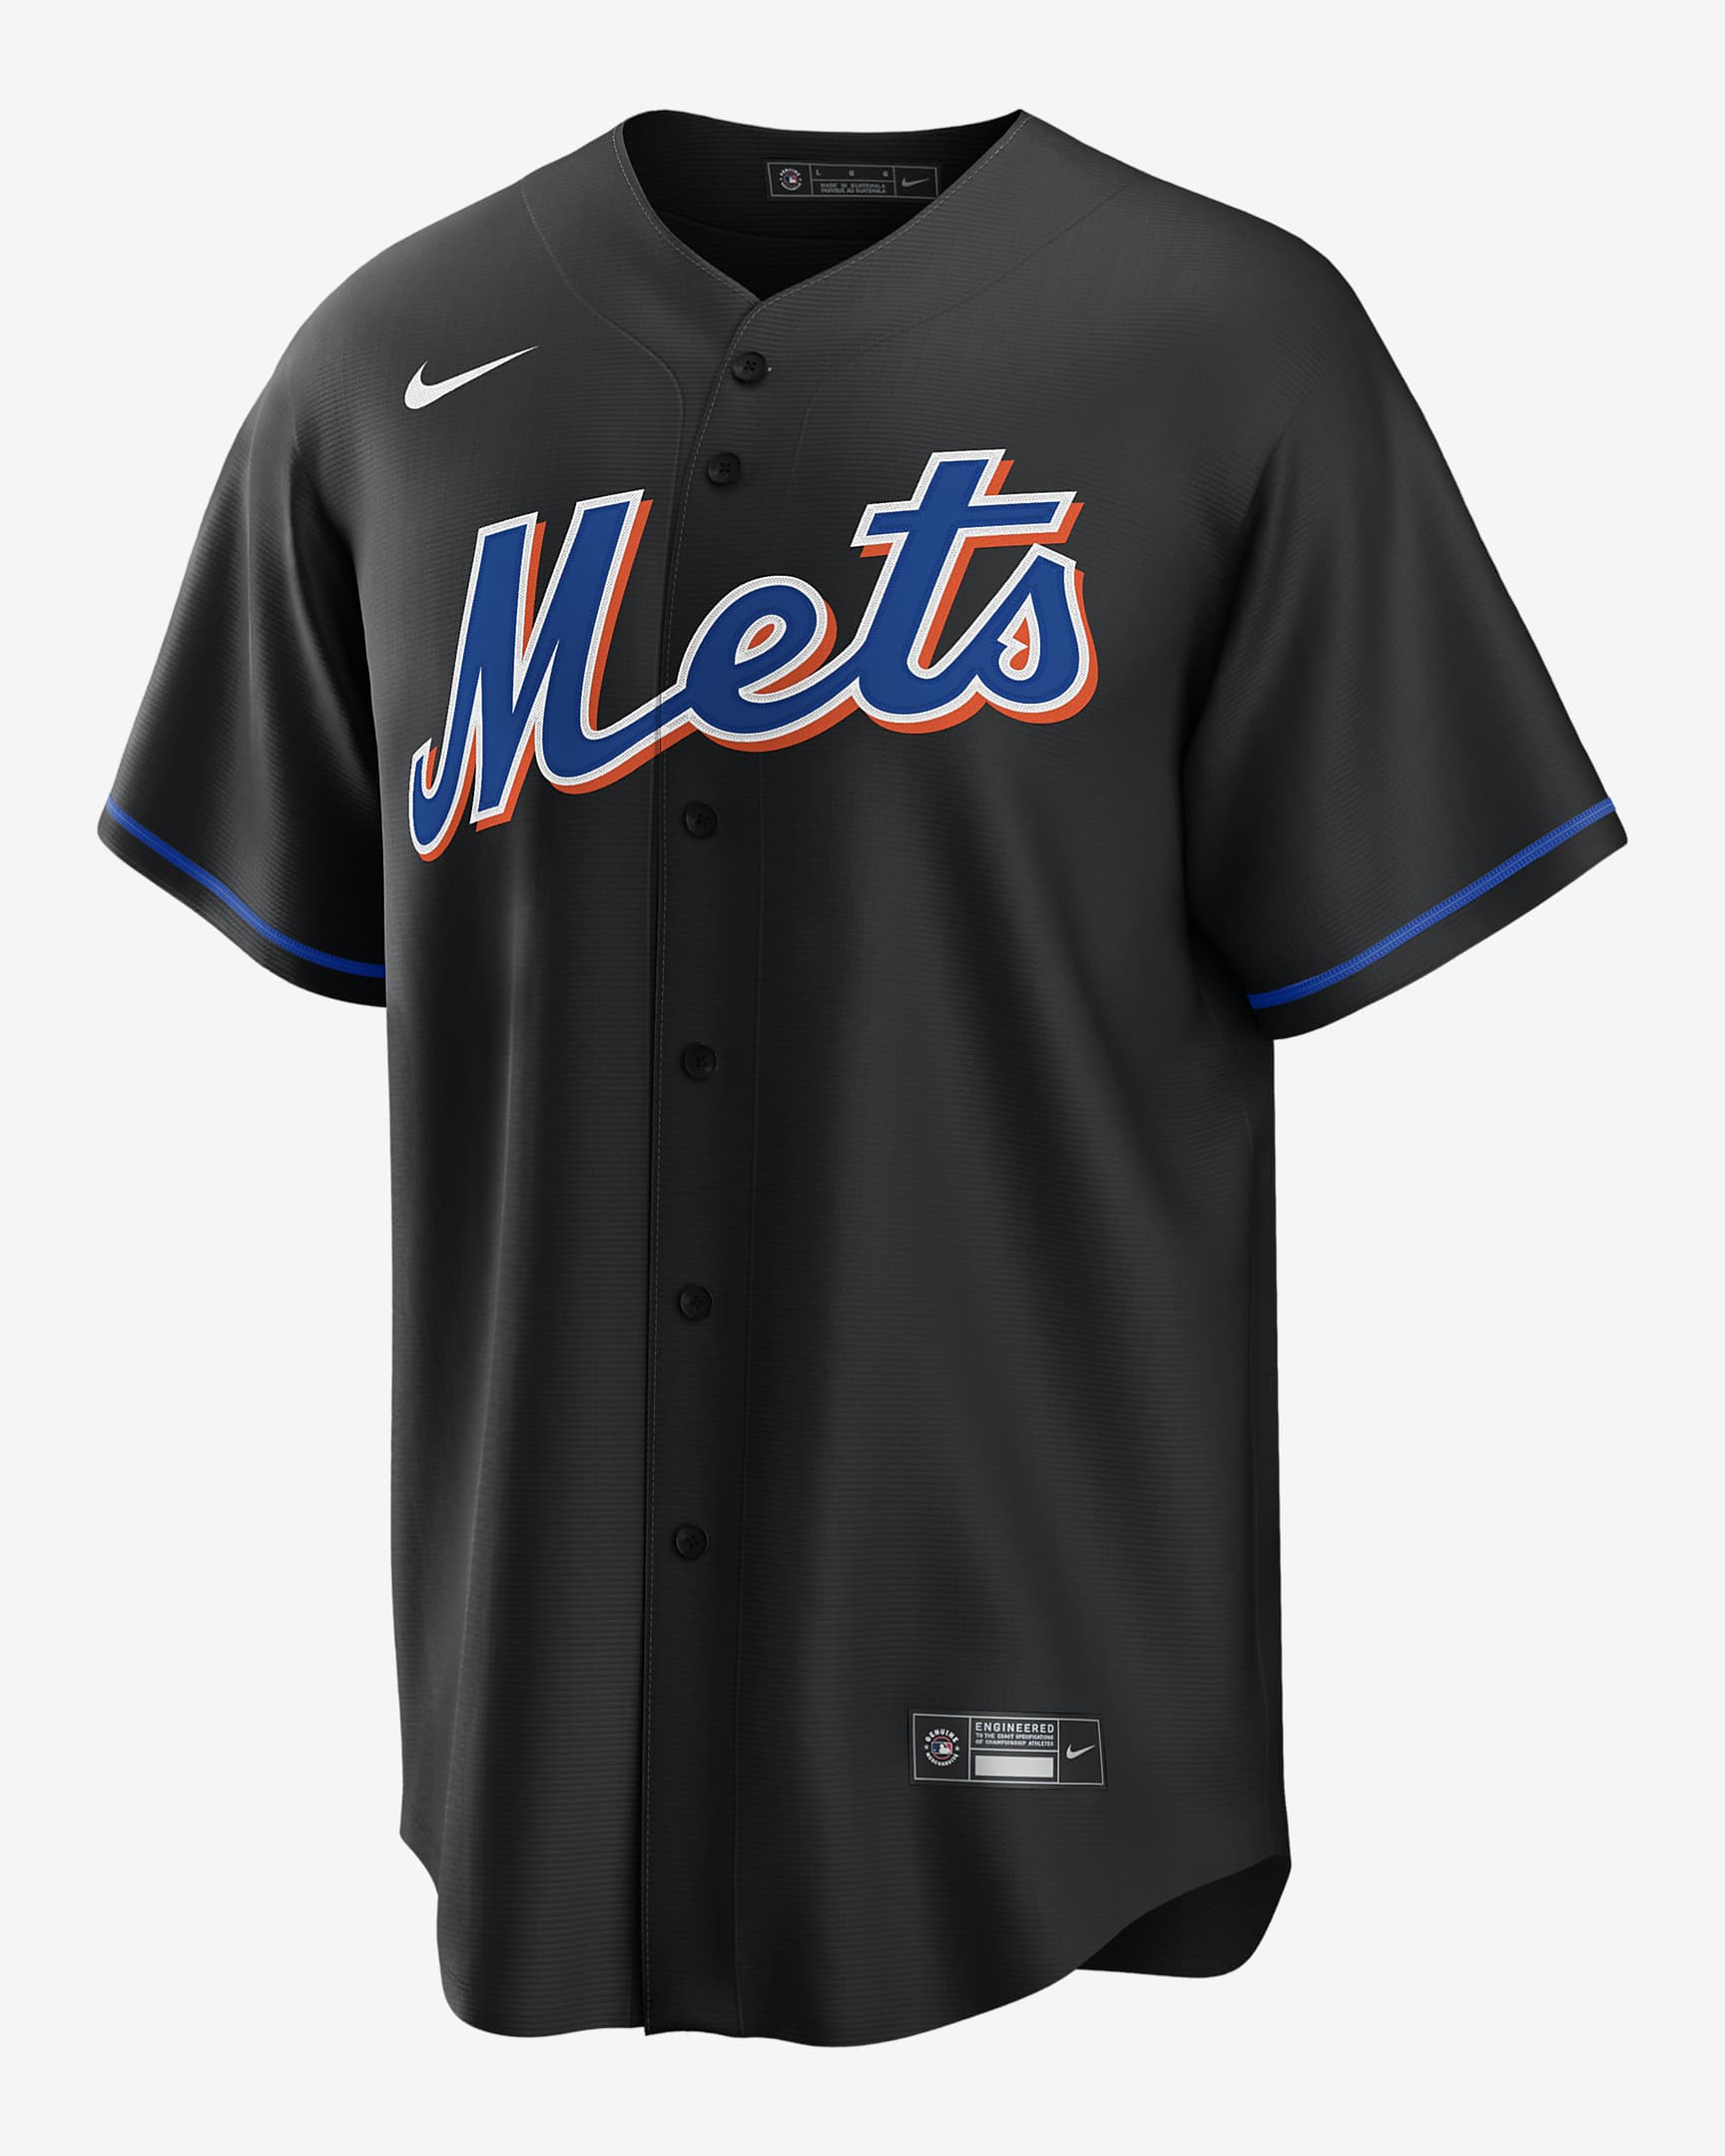 MLB New York Mets (Mike Piazza) Men's Replica Baseball Jersey.